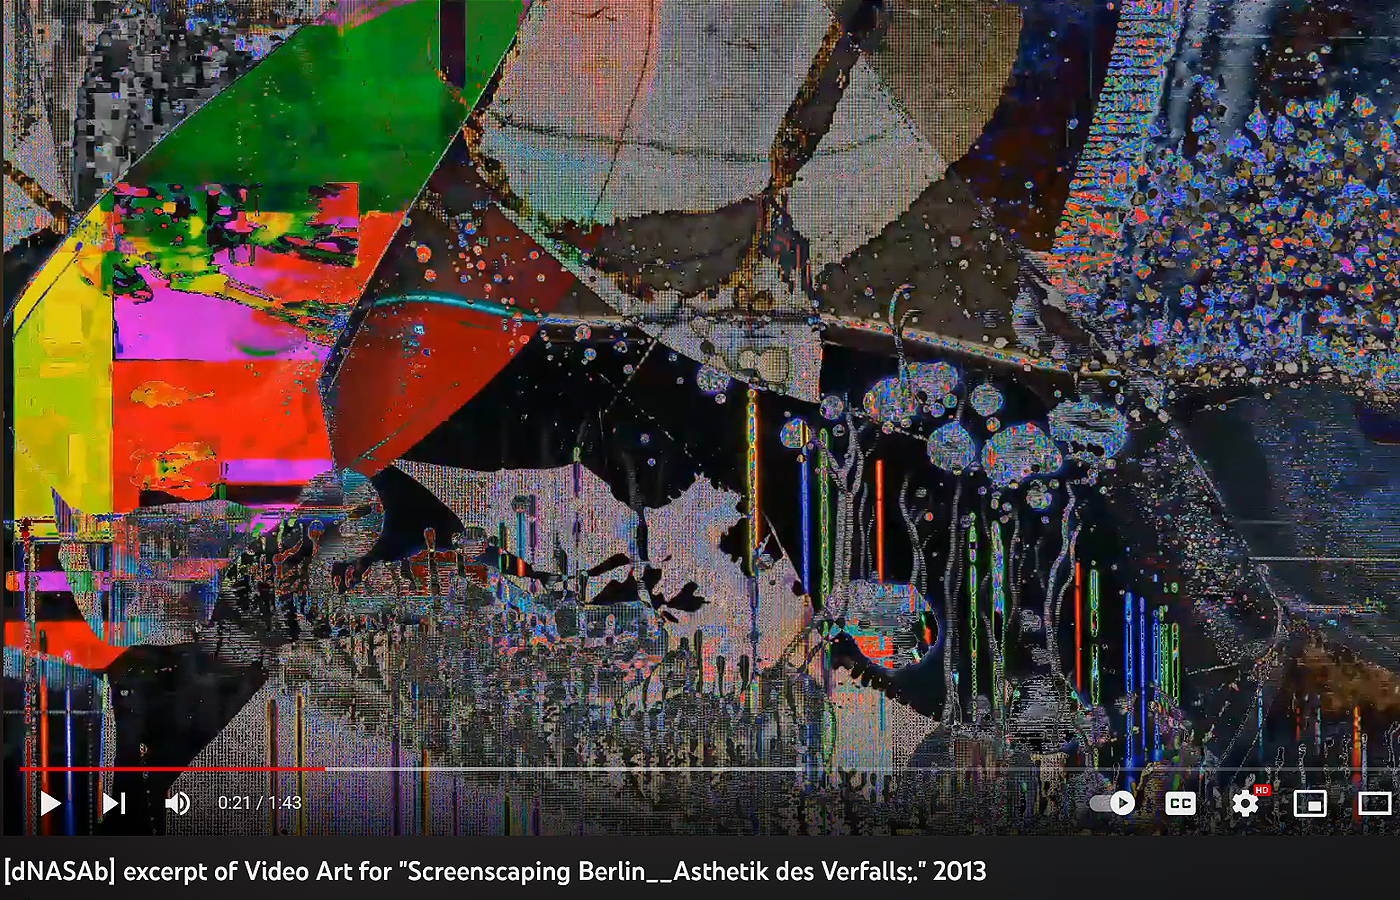 [dNASAb] excerpt of Video Art for "Screenscaping Berlin__Asthetik des Verfalls;." 2013